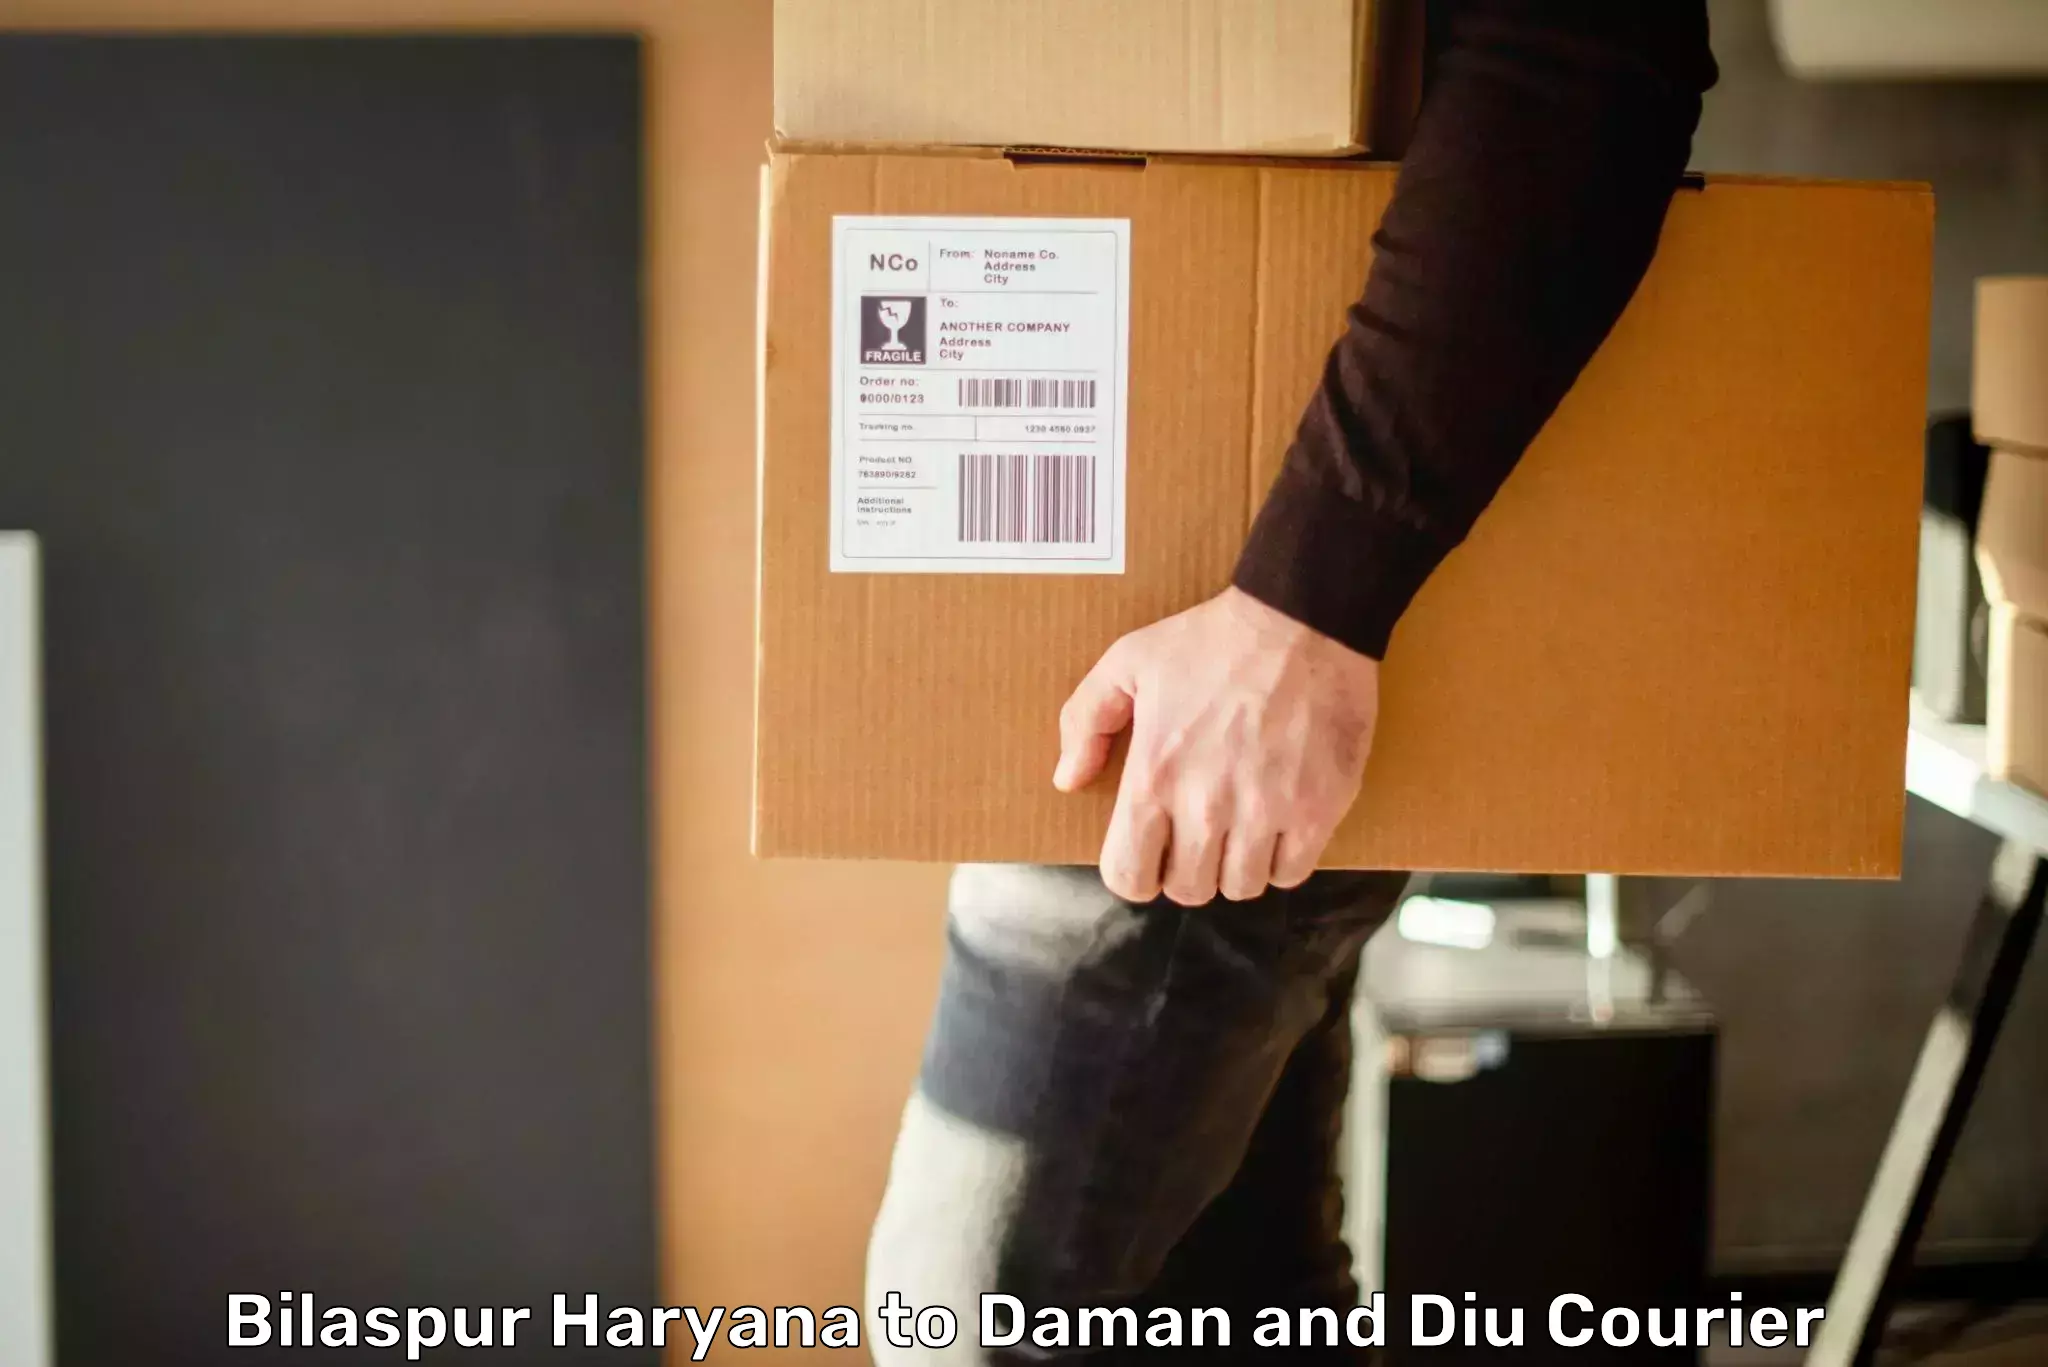 Courier service innovation Bilaspur Haryana to Daman